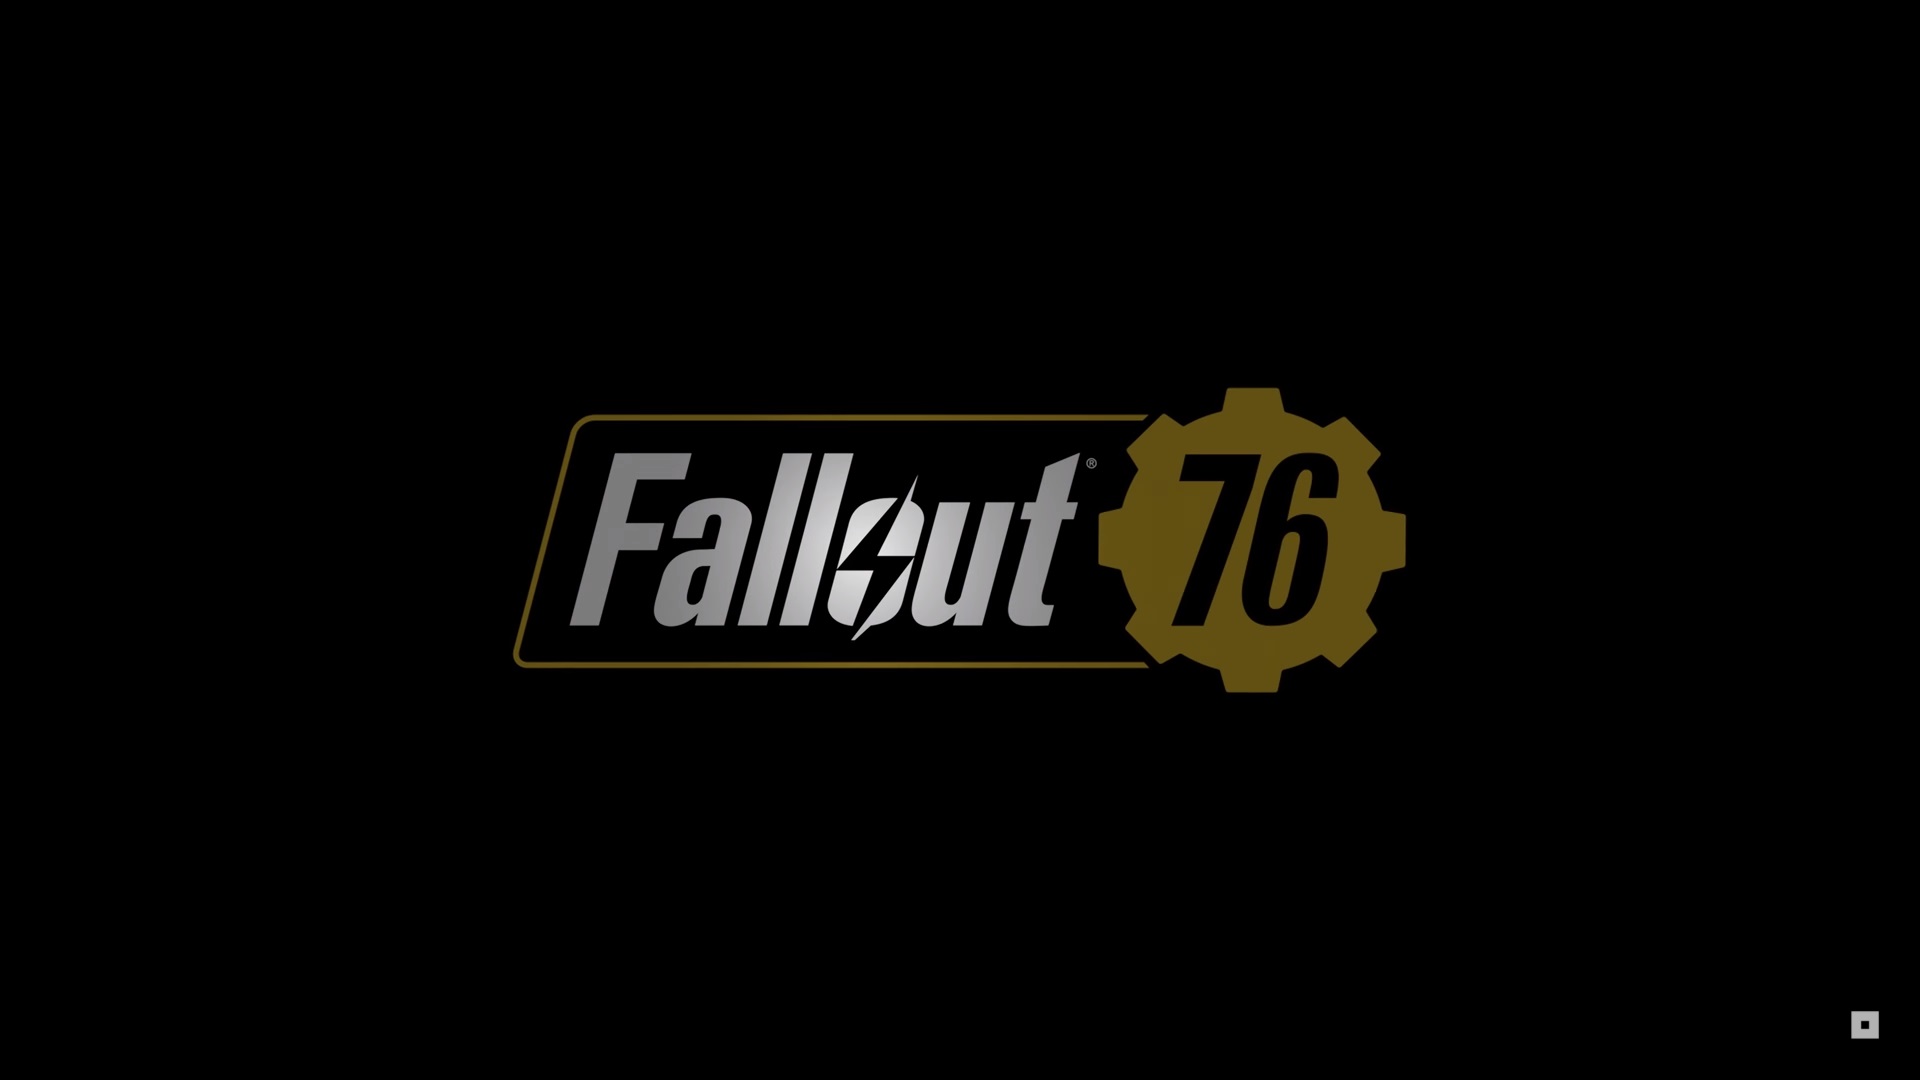 Fallout 76 E3 2018 tanıtım videosu